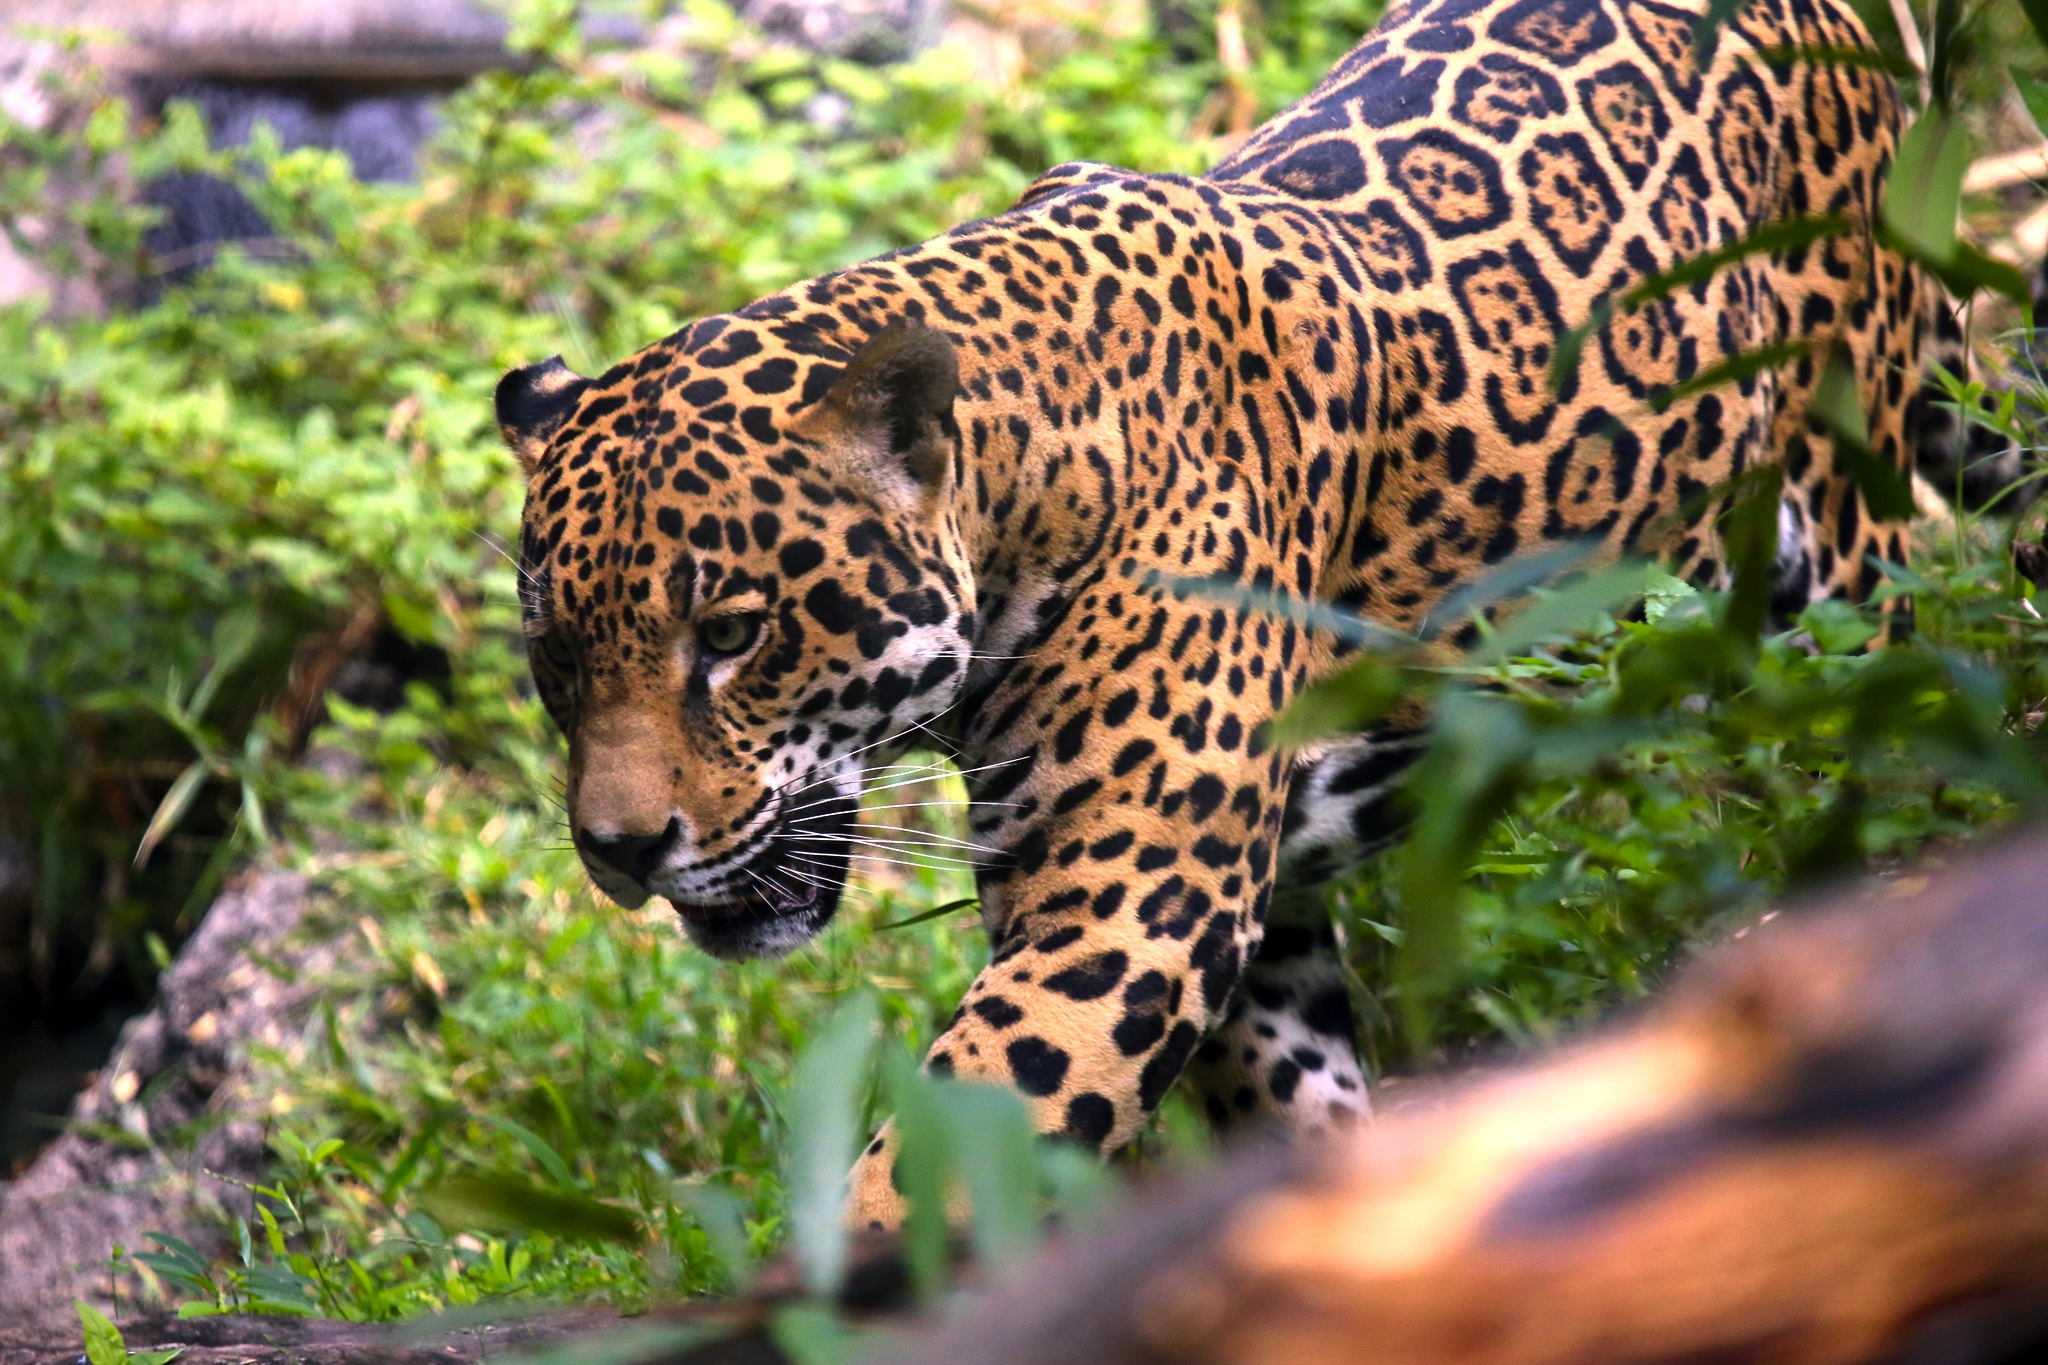 <p>The Mayan Train could impact the jaguar&#8217;s natural habitat (image: <a href="https://www.flickr.com/photos/cuatrok77/10937394883/in/photolist-hEv1rR-tBKa2E-8VbVNA-s187bT-s17W4P-6qTMuQ-s2T9uj-s2T4WS-9xysS7-hKxCp8-e5eCfX-8KUvQv-4wVPAJ-dVXqhP-7FxTVd-h3c9Qr-cixcoU-h6aGAh-a2zvih-fzszAj-qVifTF-qrwcih-WNiwjP-QqKUR-b4rE3x-hF8djg-7kRiCB-qLJu1E-dNH1fp-h6bt3x-ccshR-4EeGfP-sh9ScQ-hKy2zM-fzsrDS-6XHwmK-5yxbBZ-hEubEu-hKxbT9-ppztrK-wq3M8-7CHHXA-8uWcqV-4tzMCL-h6a25z-h6Lh5H-h6JUMh-hF775g-fzdfrg-h6JT11">Cuatrok</a>)</p>